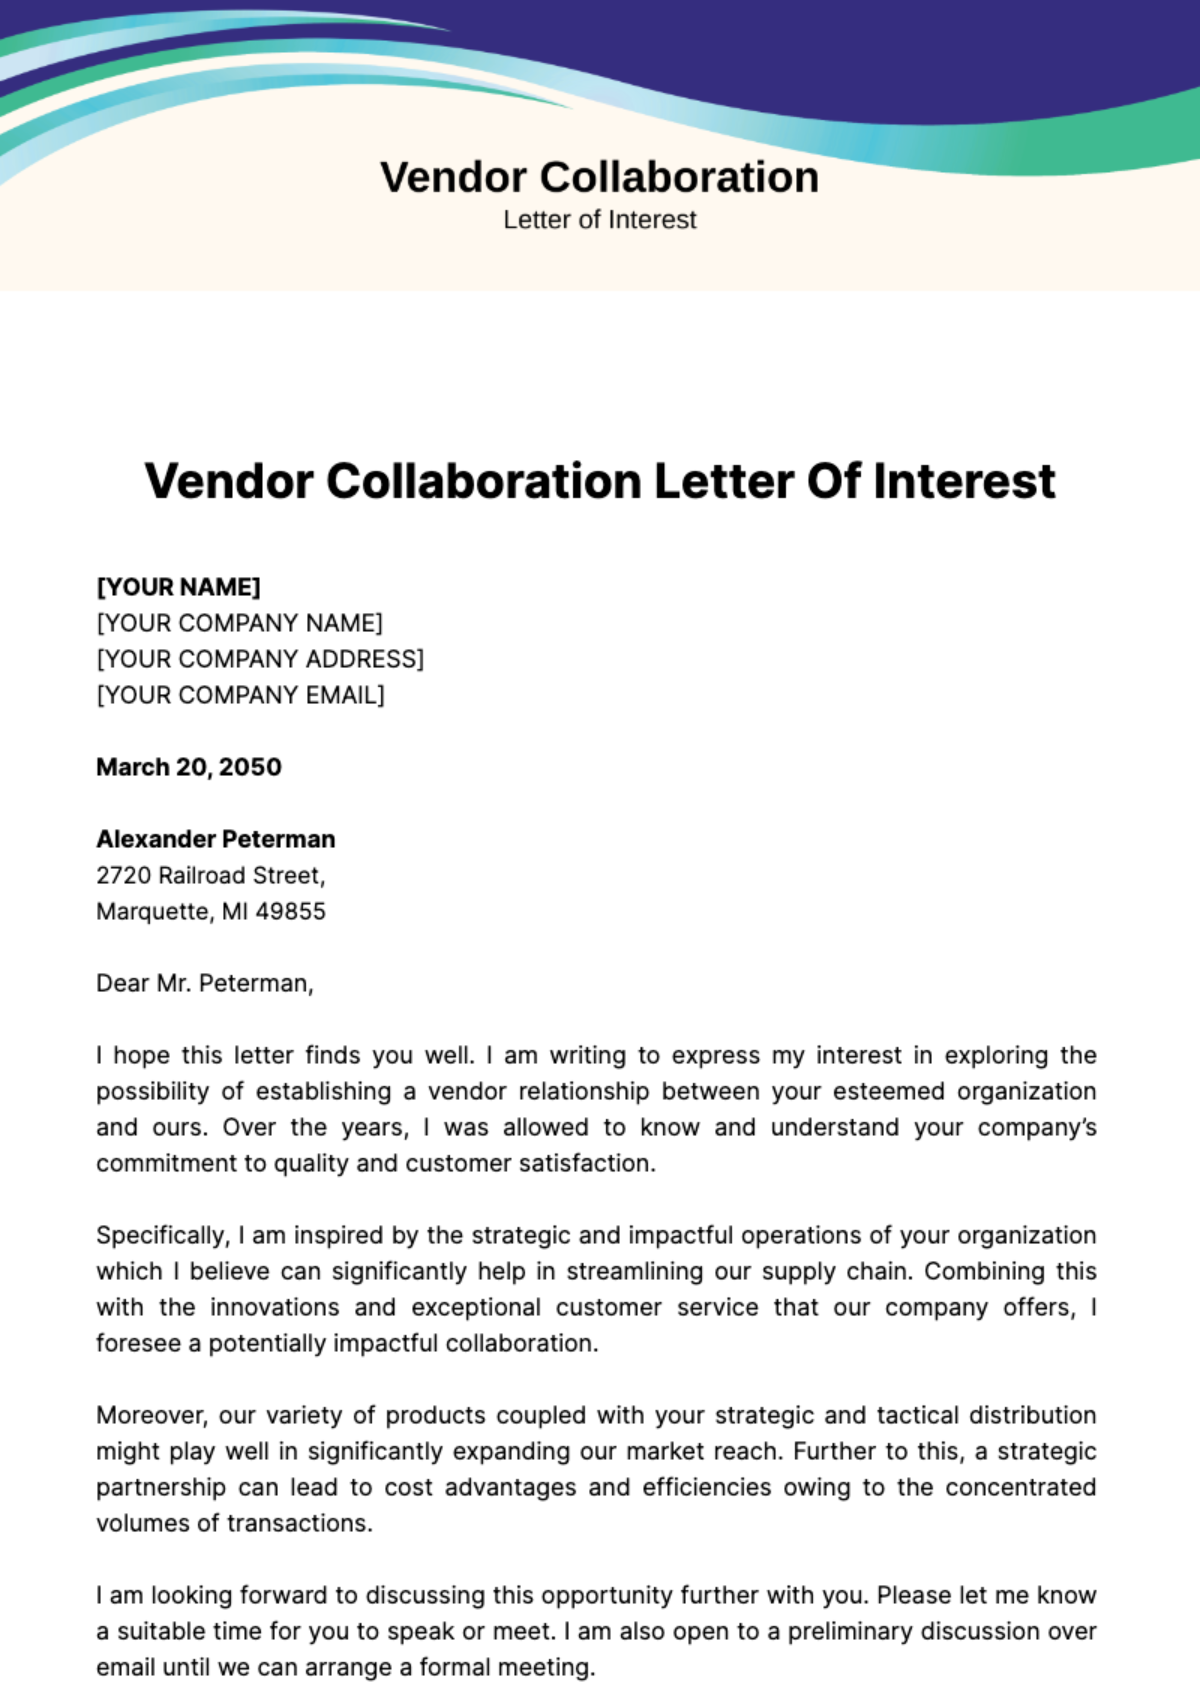 Vendor Collaboration Letter of Interest Template